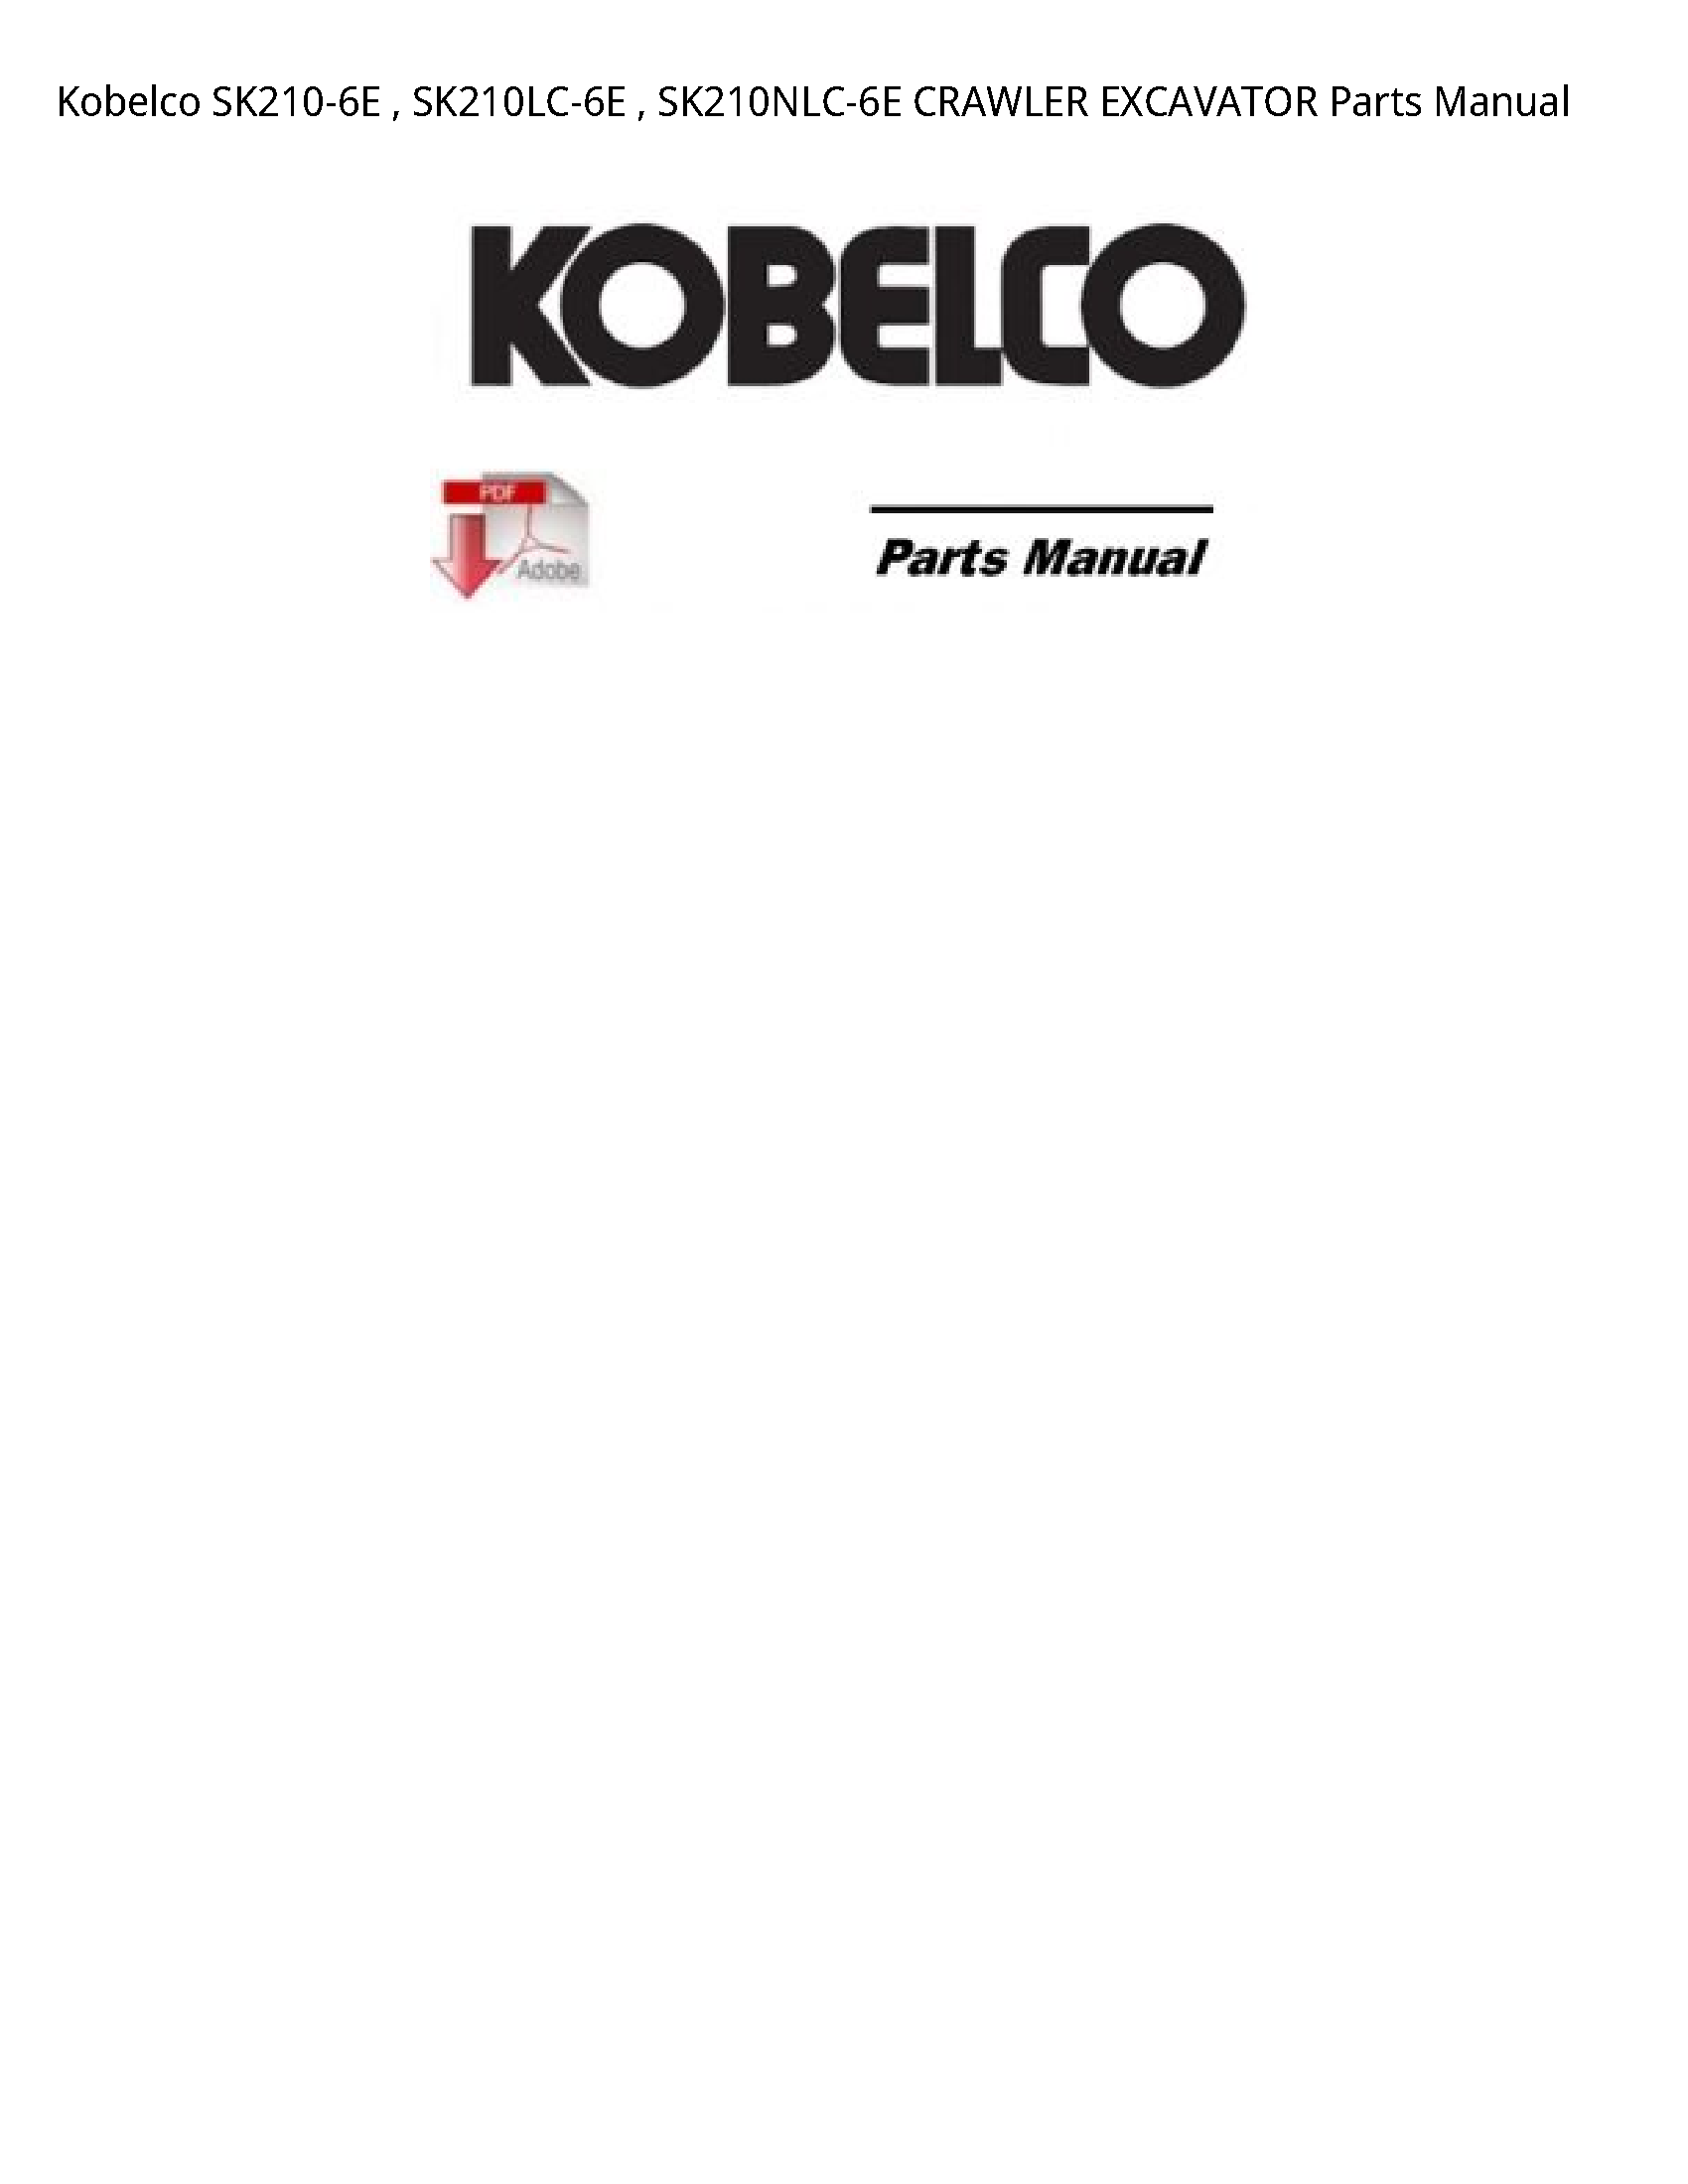 Kobelco SK210-6E CRAWLER EXCAVATOR Parts manual